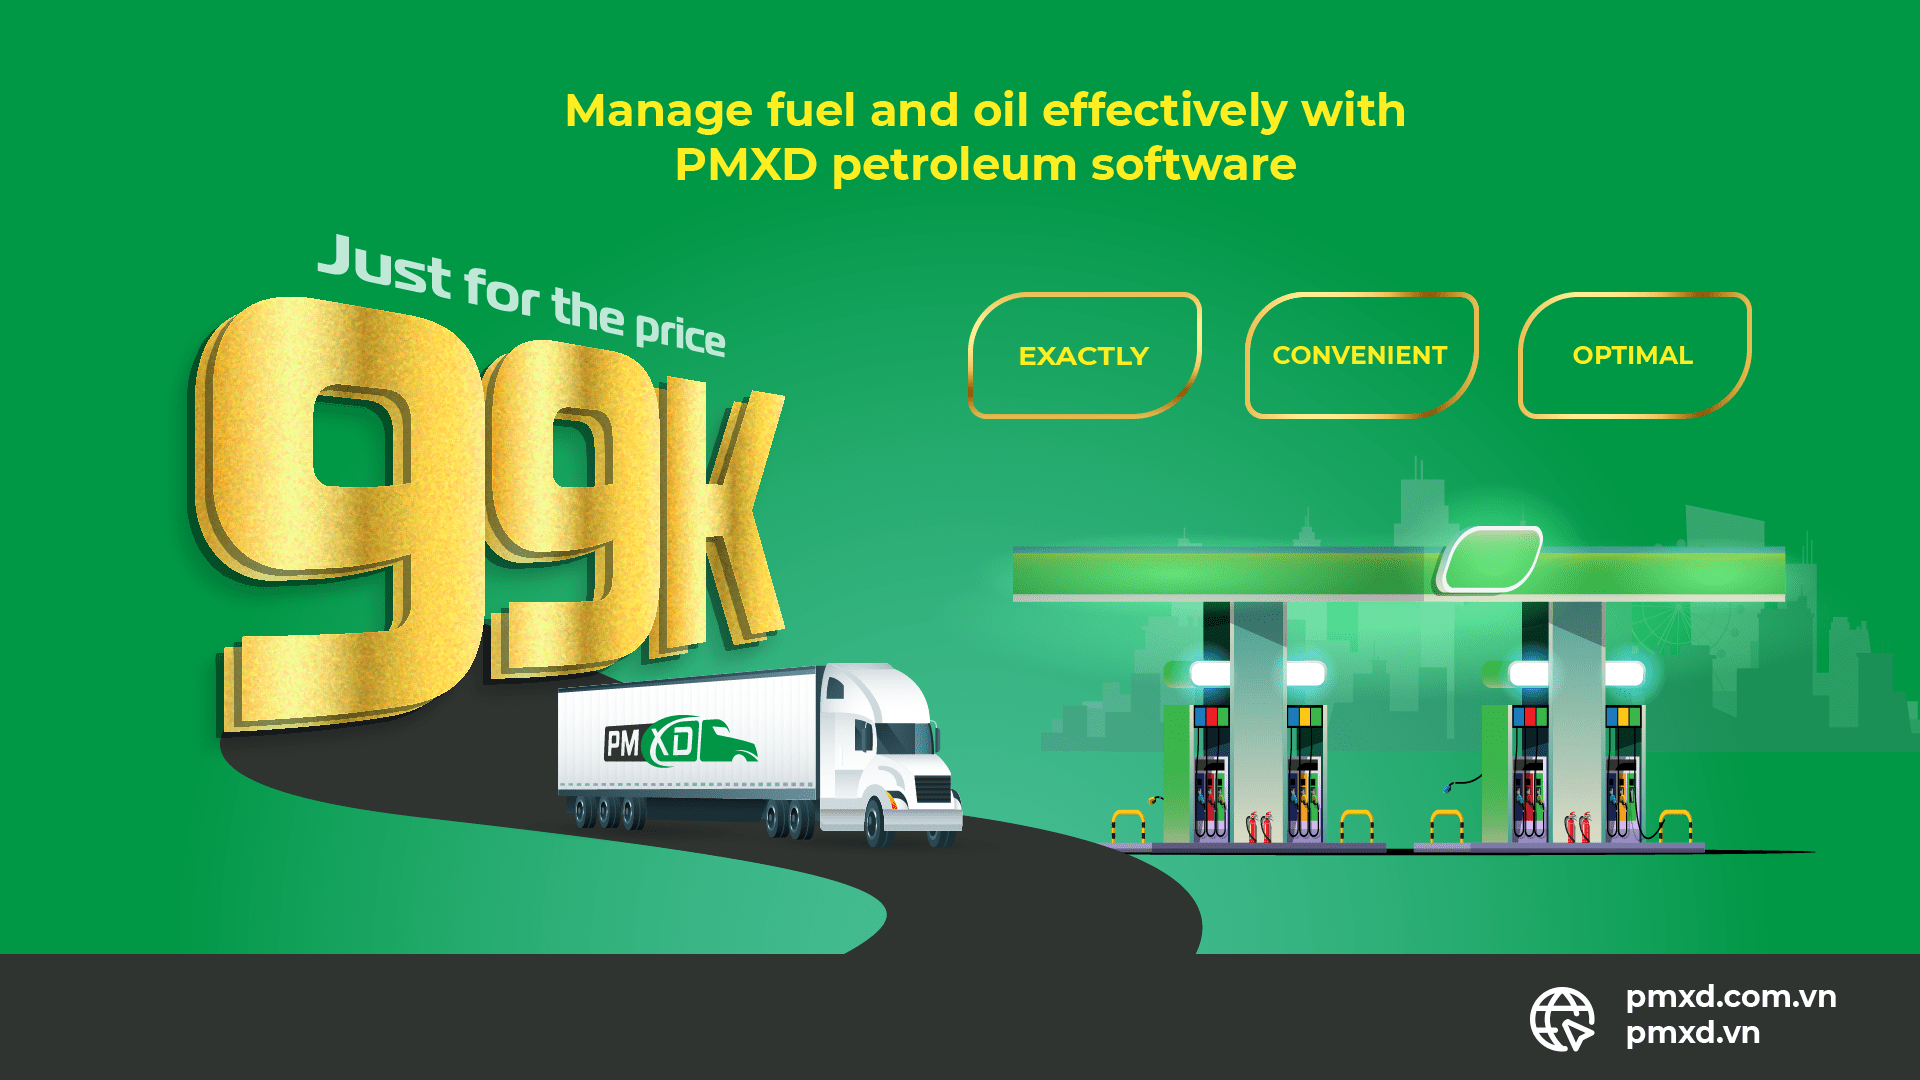 Price of PMXD petroleum management software